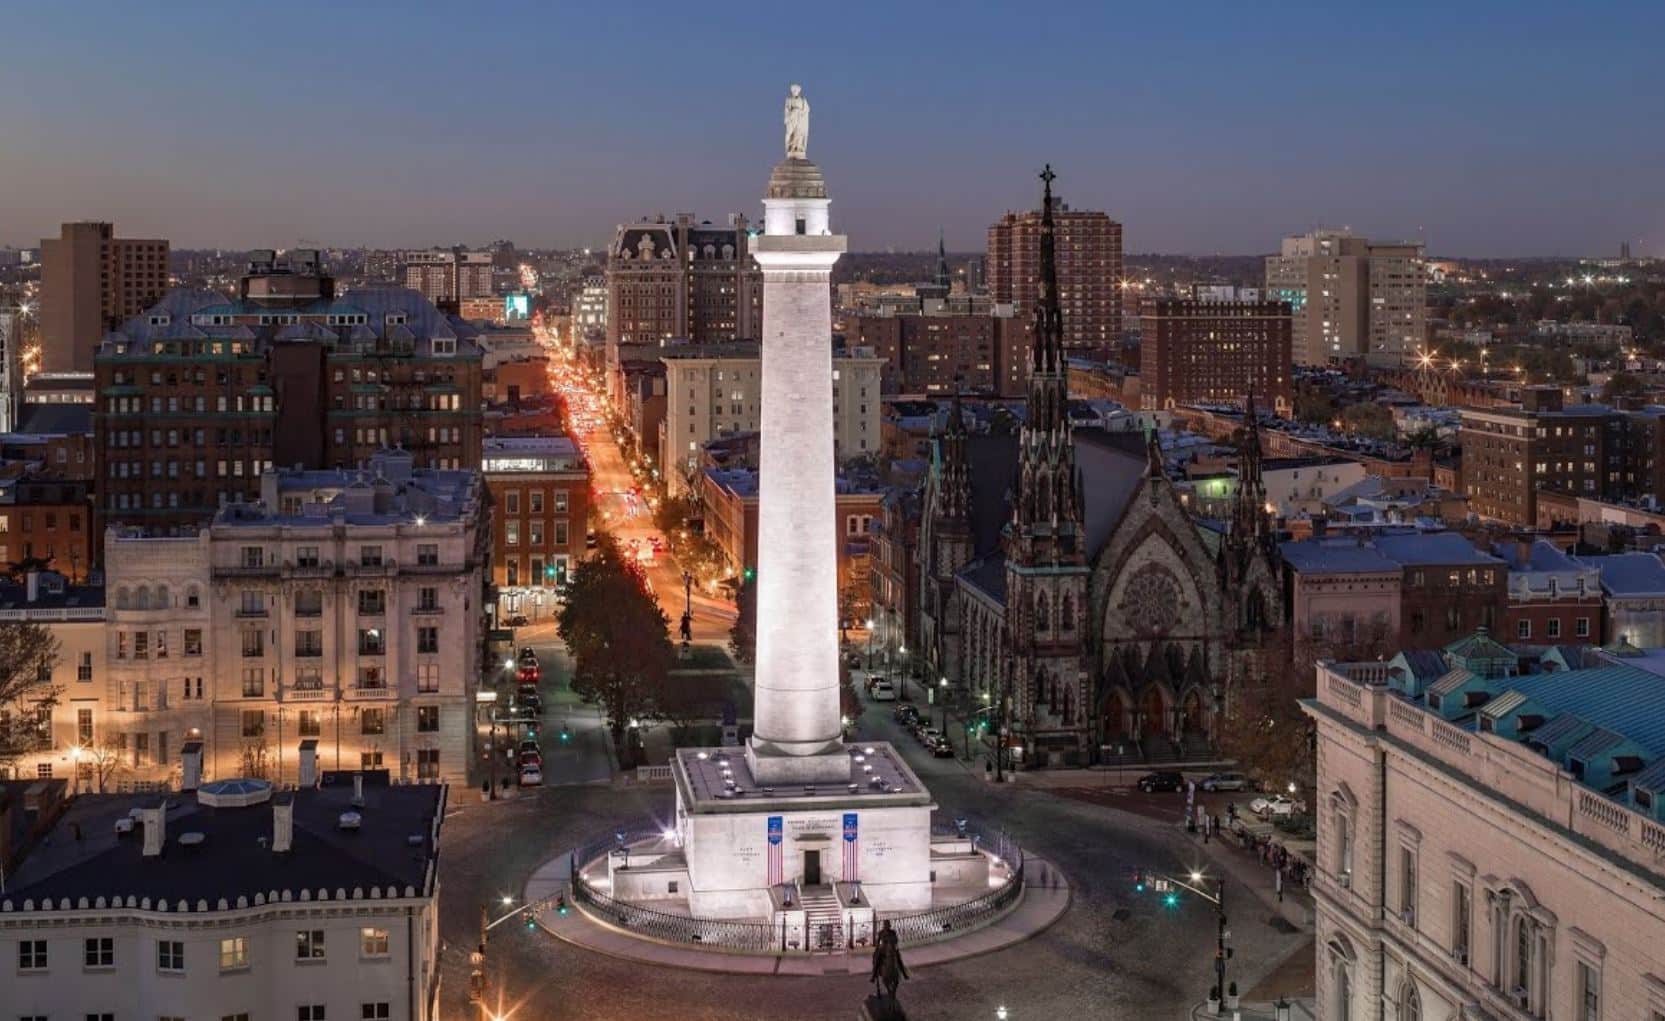 Washington Monument in Baltimore